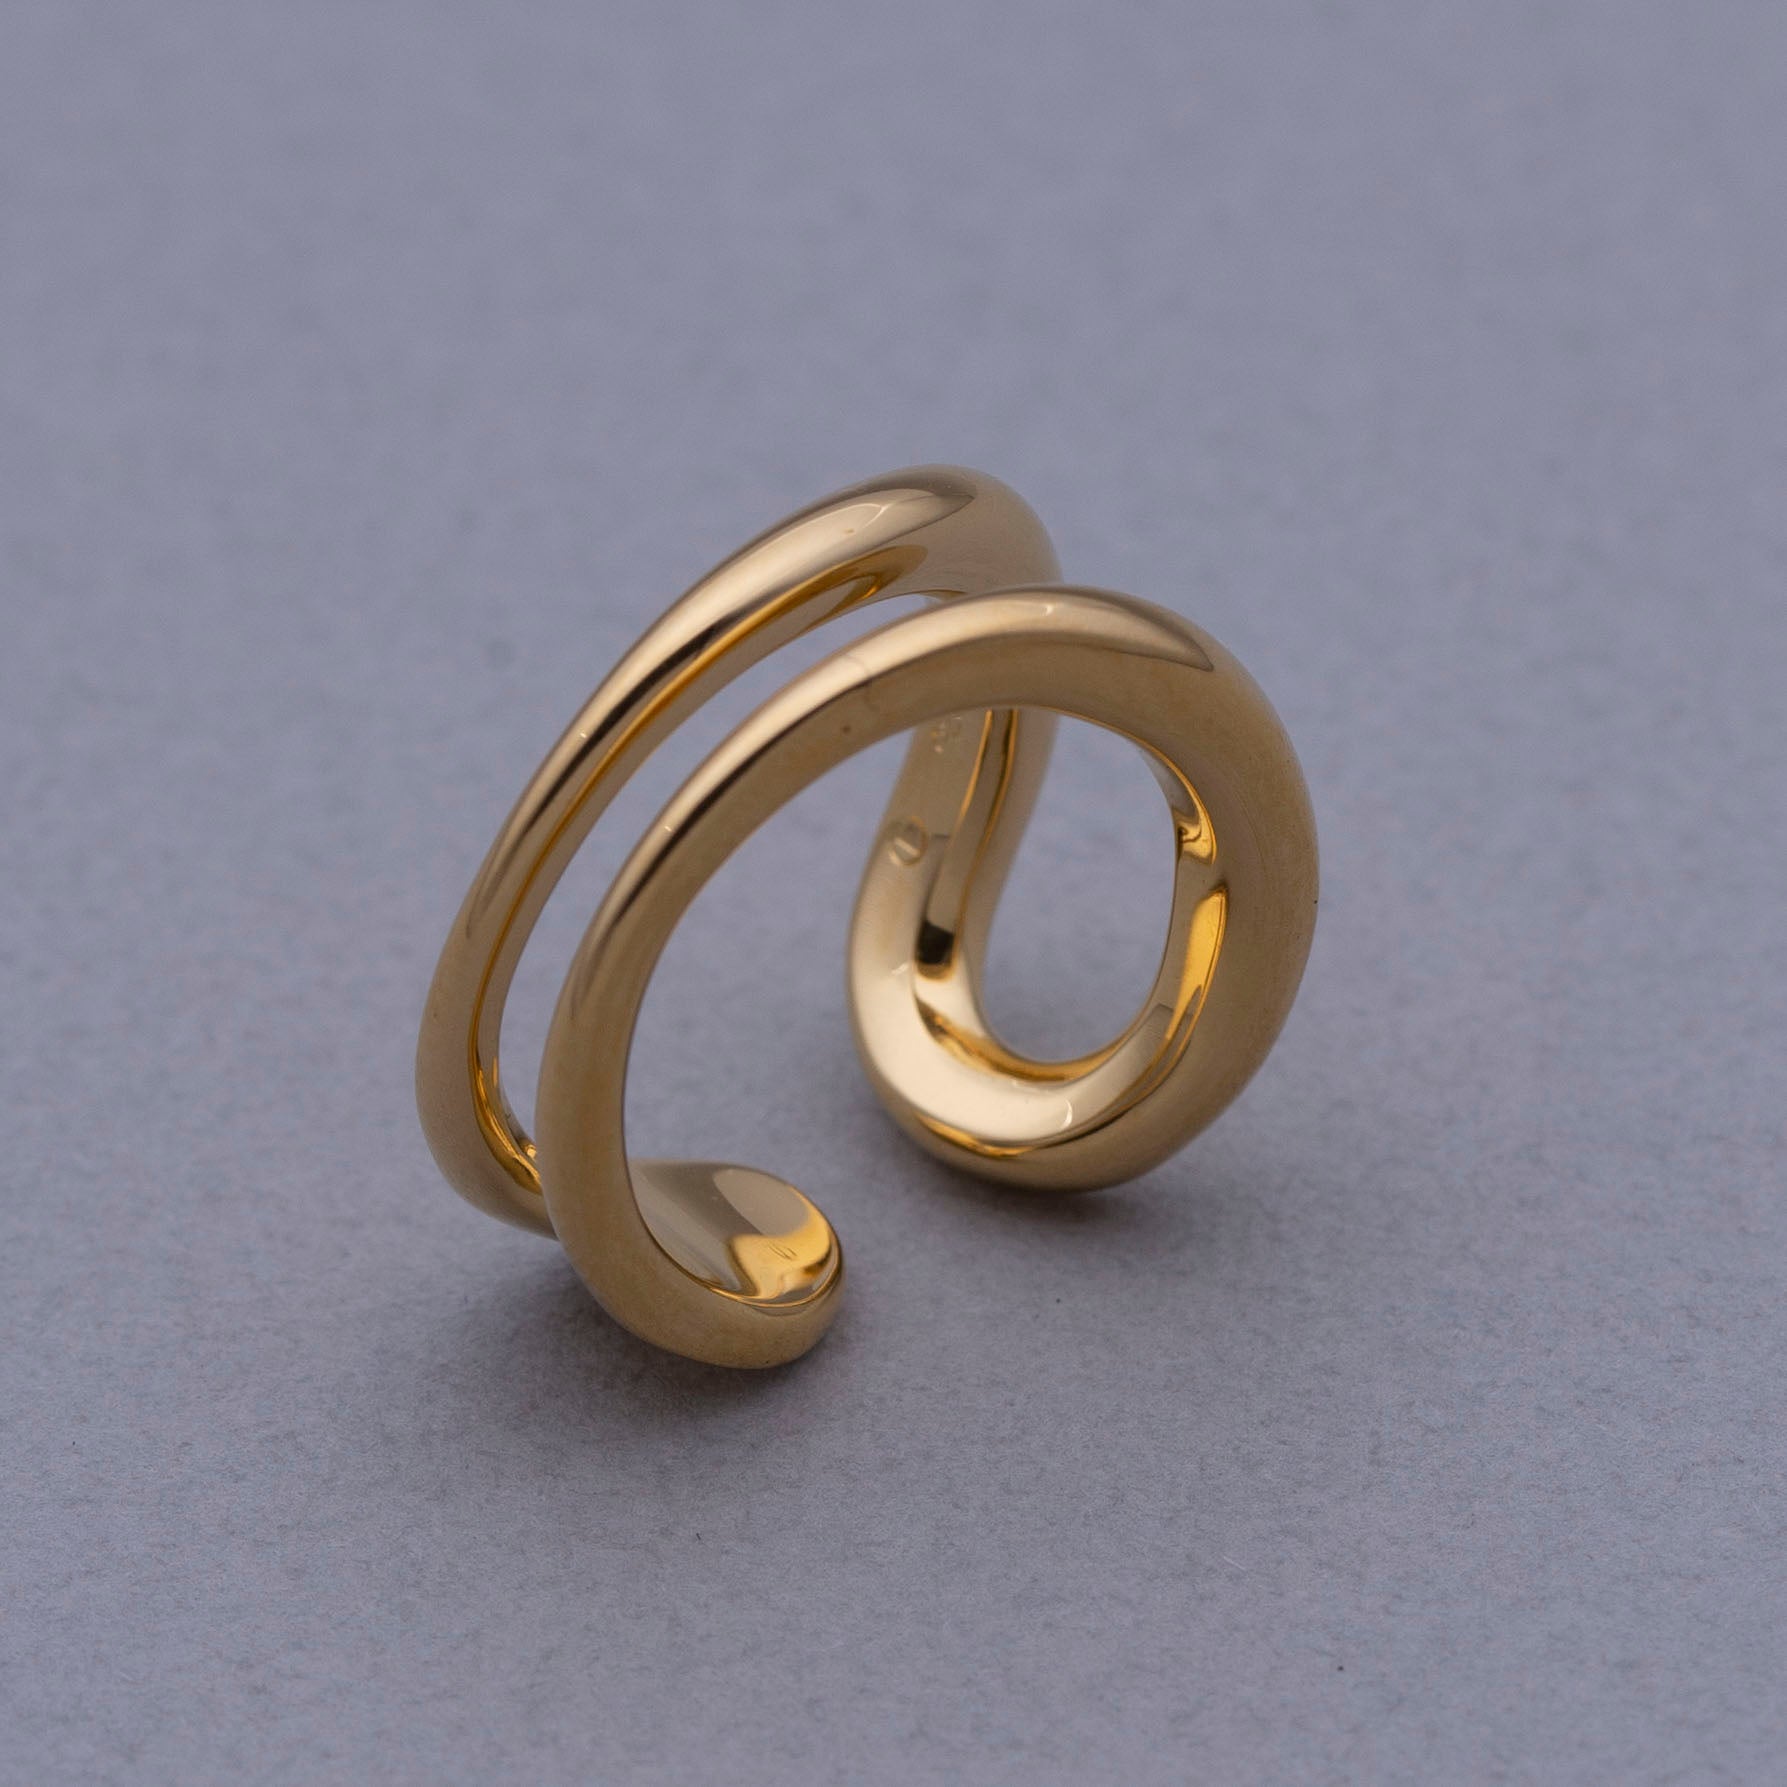 Safety pin ring Gold